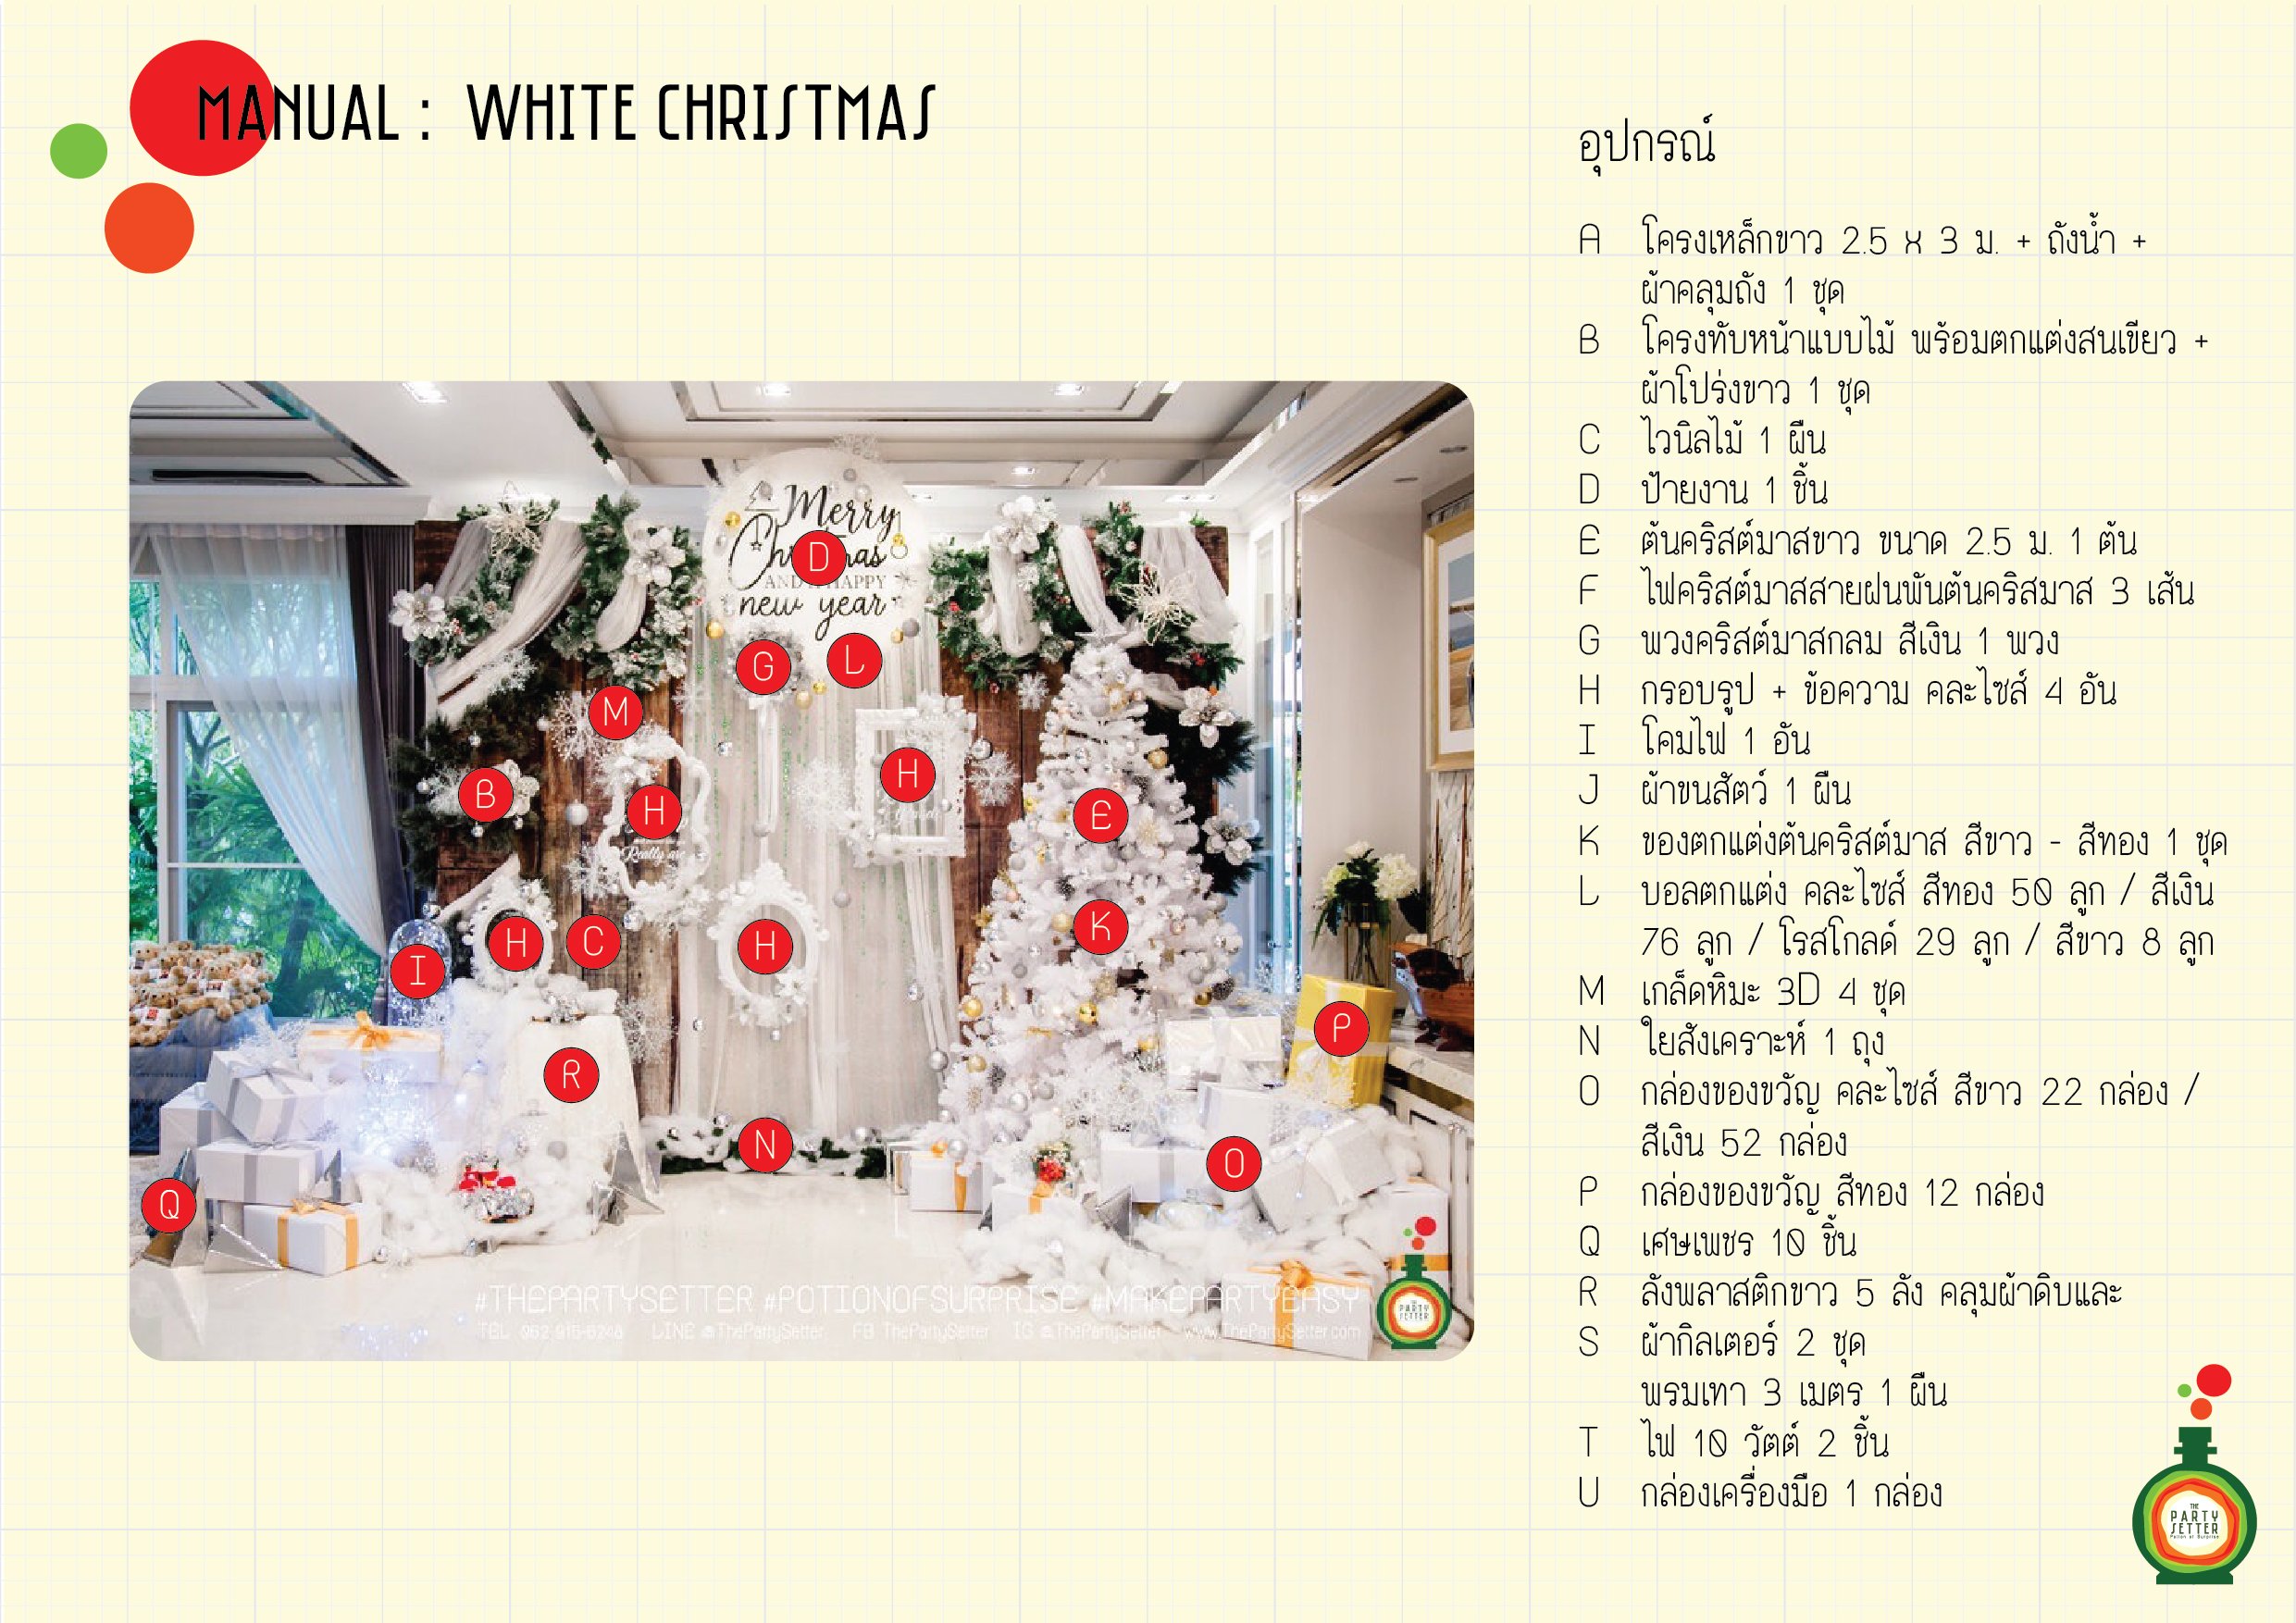 Manual_White Christmas-00-01.jpg